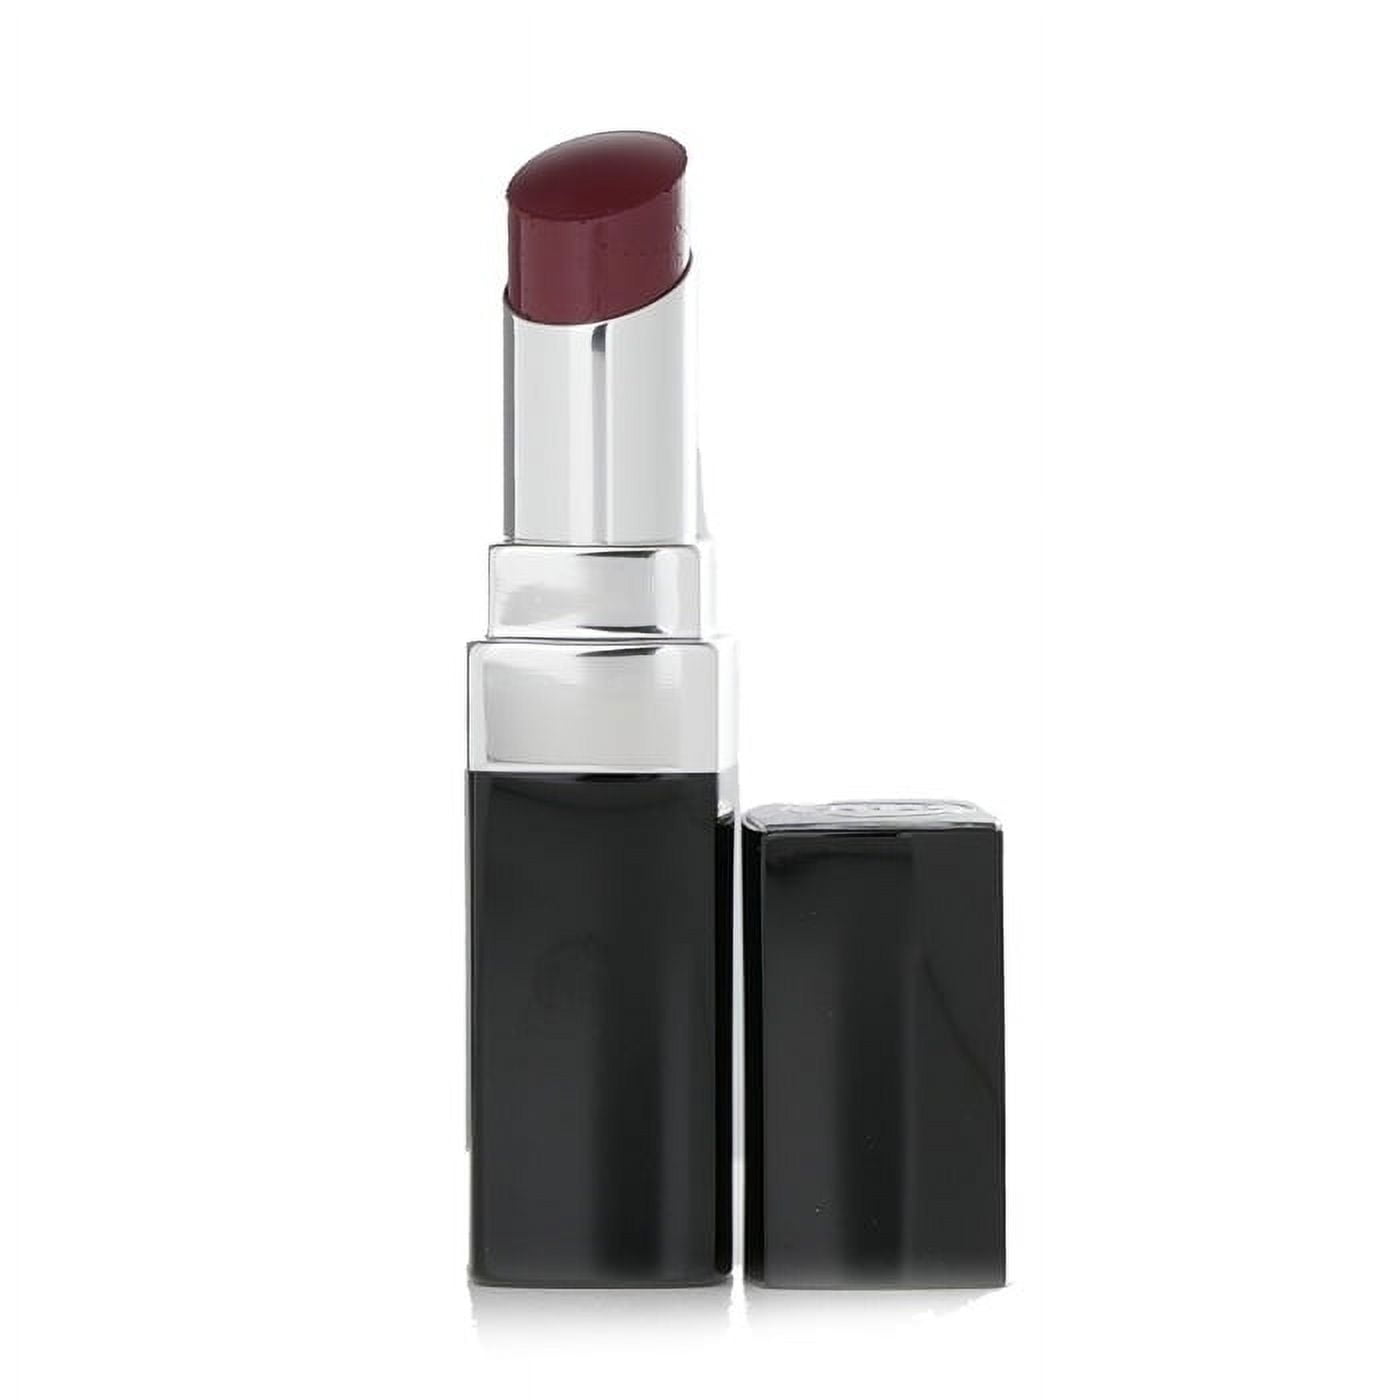 Chanel- Rouge Coco Bloom - Hydrating Plumping Shine Lipstick - #110 Chance  - NIB